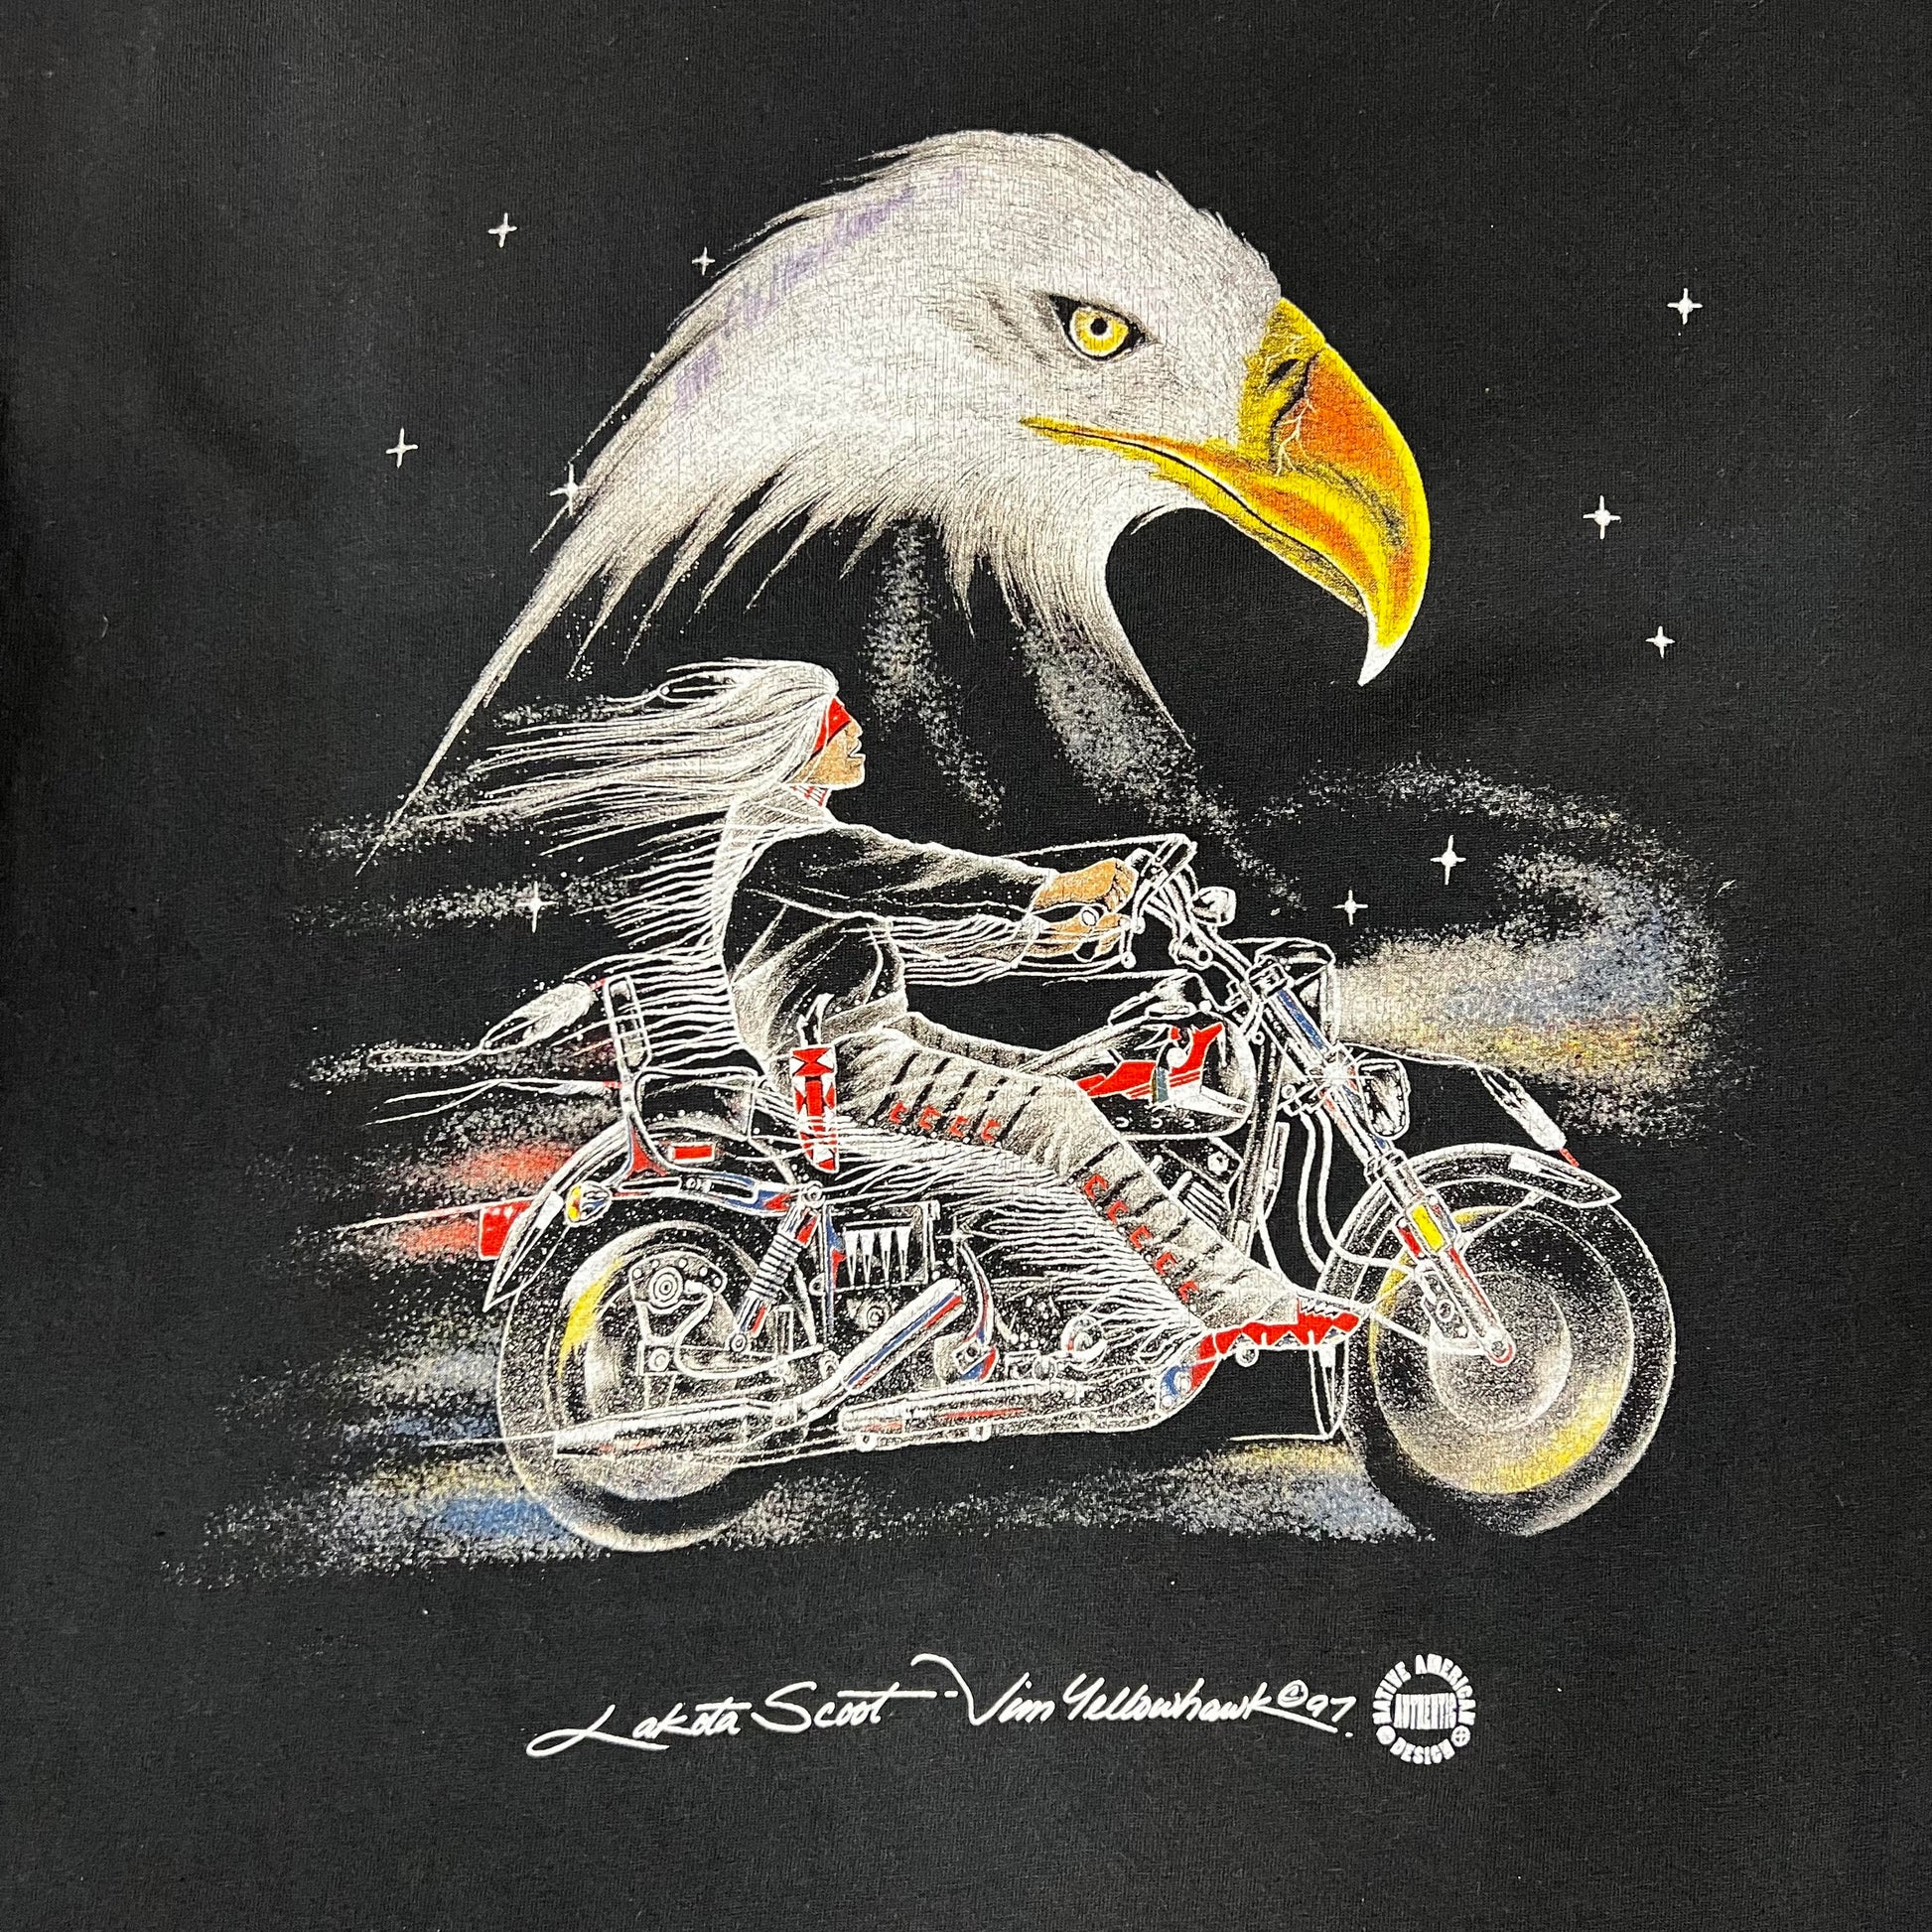 Vintage 1997 Lakota Scoot Jim Yellowhawk Biker Tee - Medium - Black